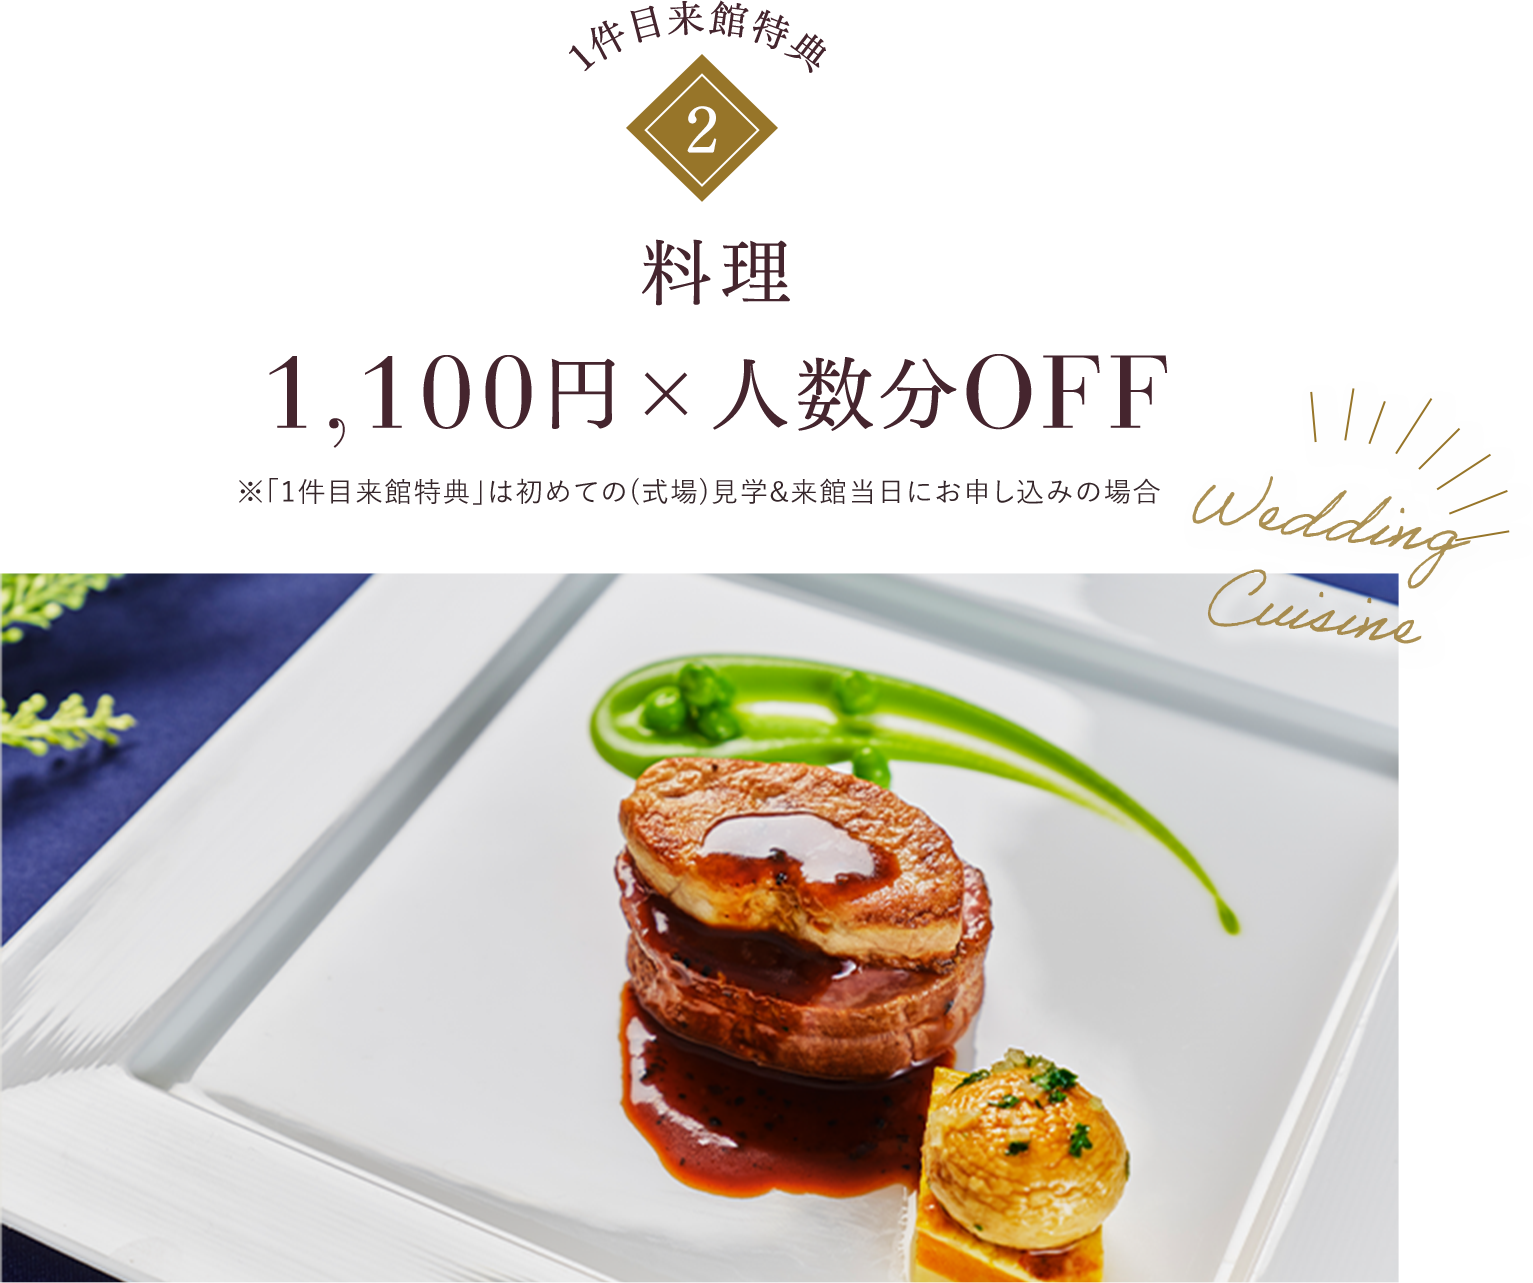 料理1,100円×人数分OFF